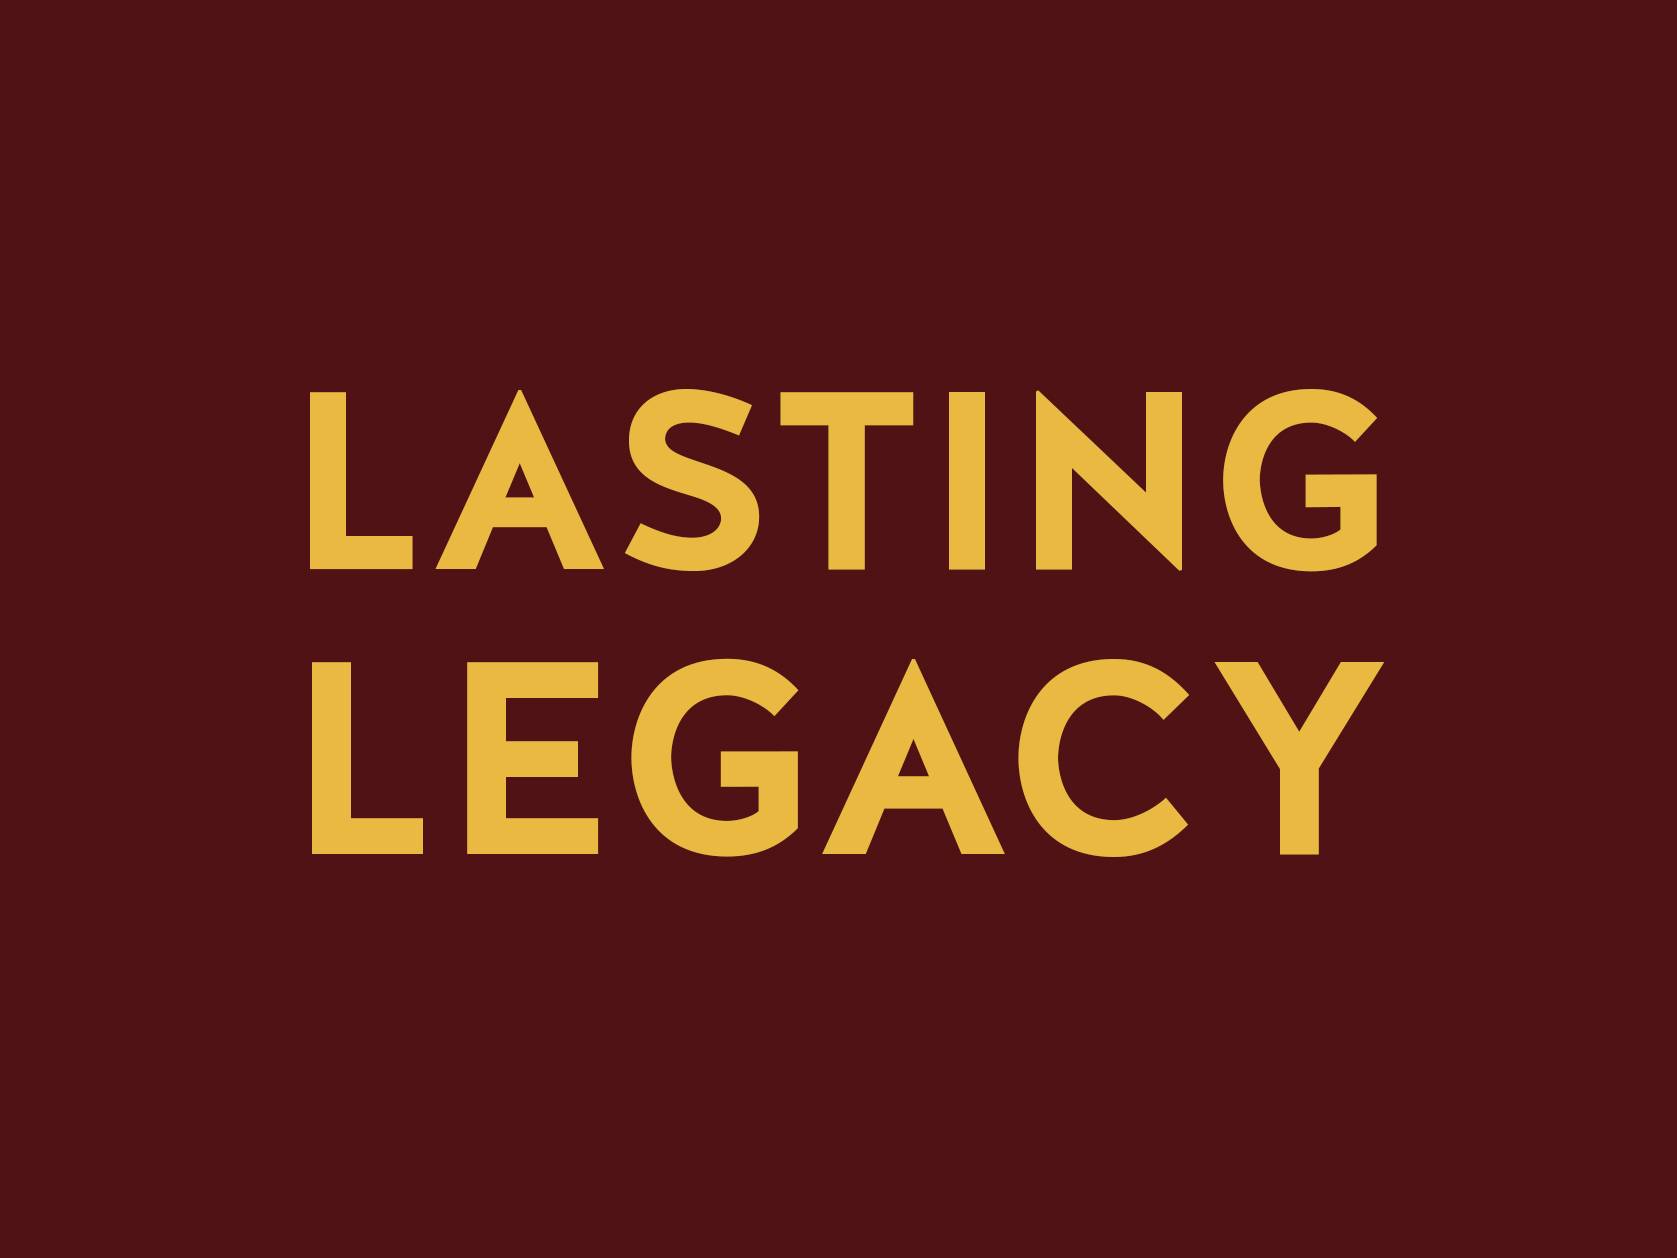 graphic reading 'lasting legacy